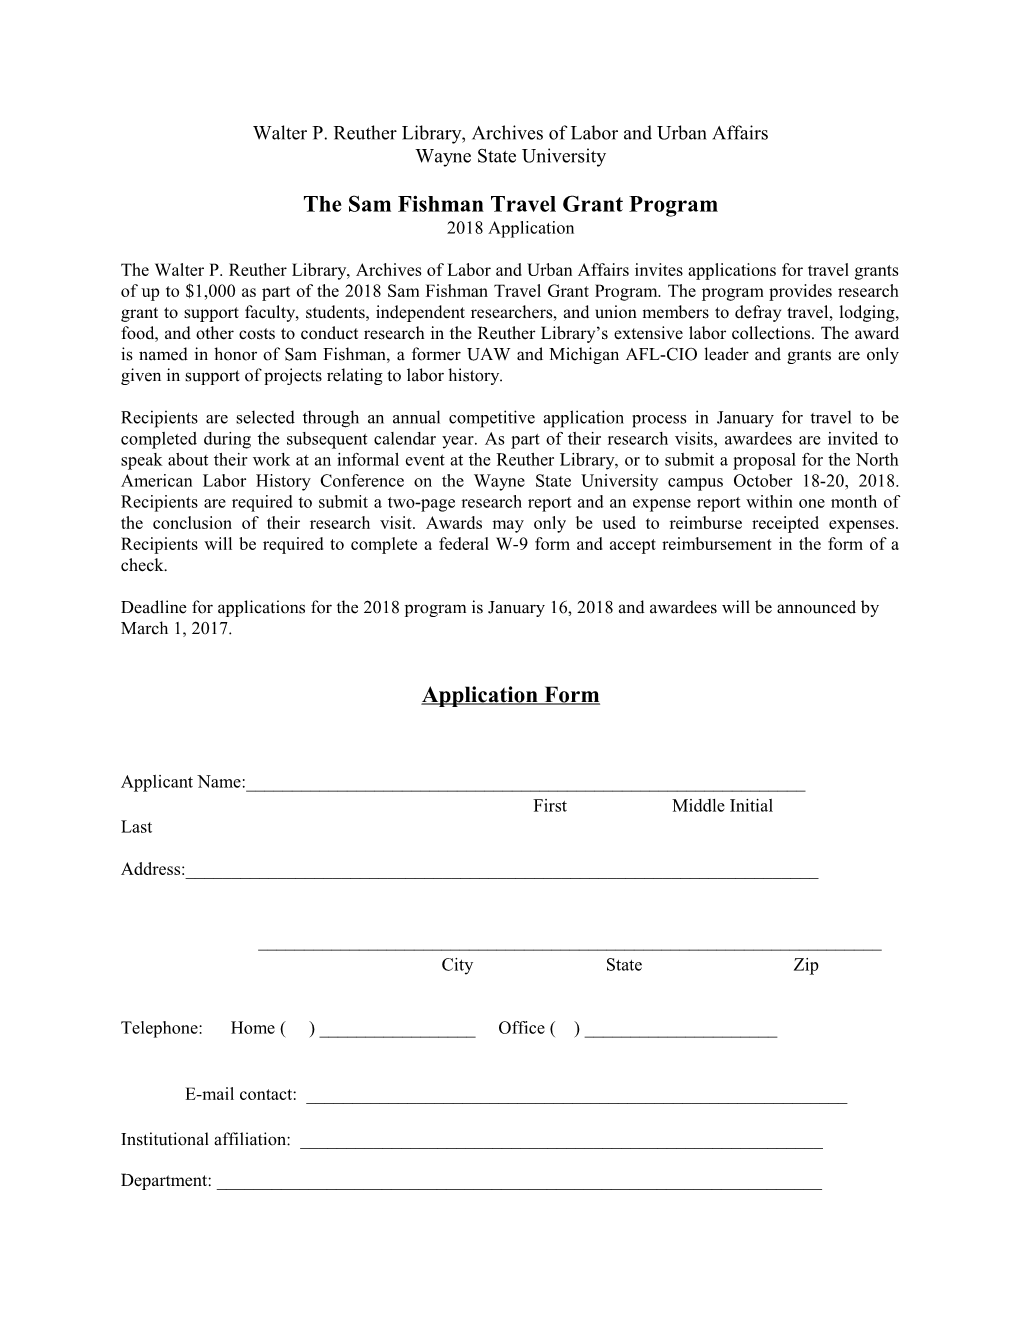 Sam Fishman Travel Grant Program 2018 Application